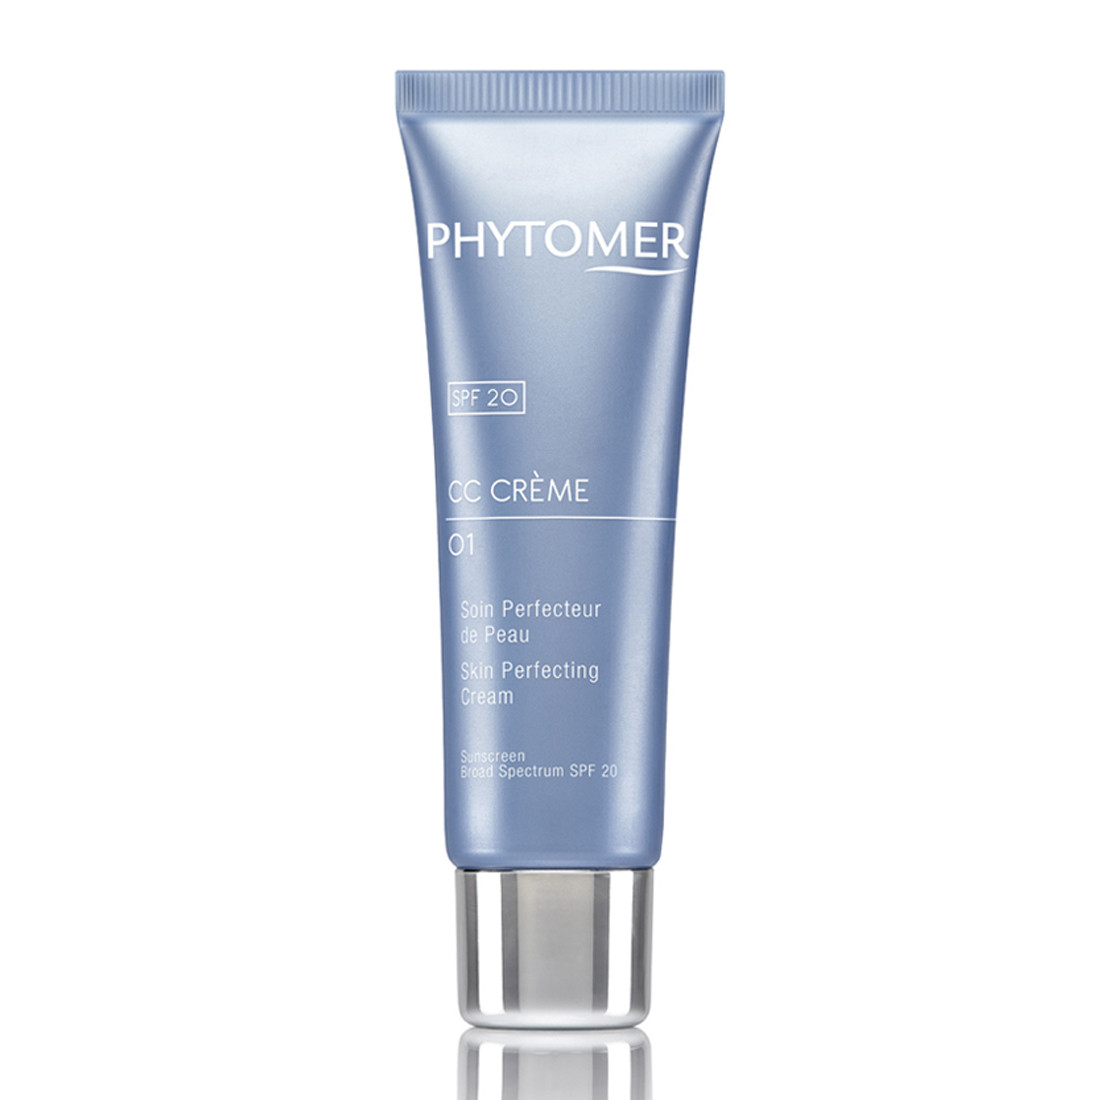 Phytomer СС Creme Skin Perfecting Cream 01 - CC-крем для лица